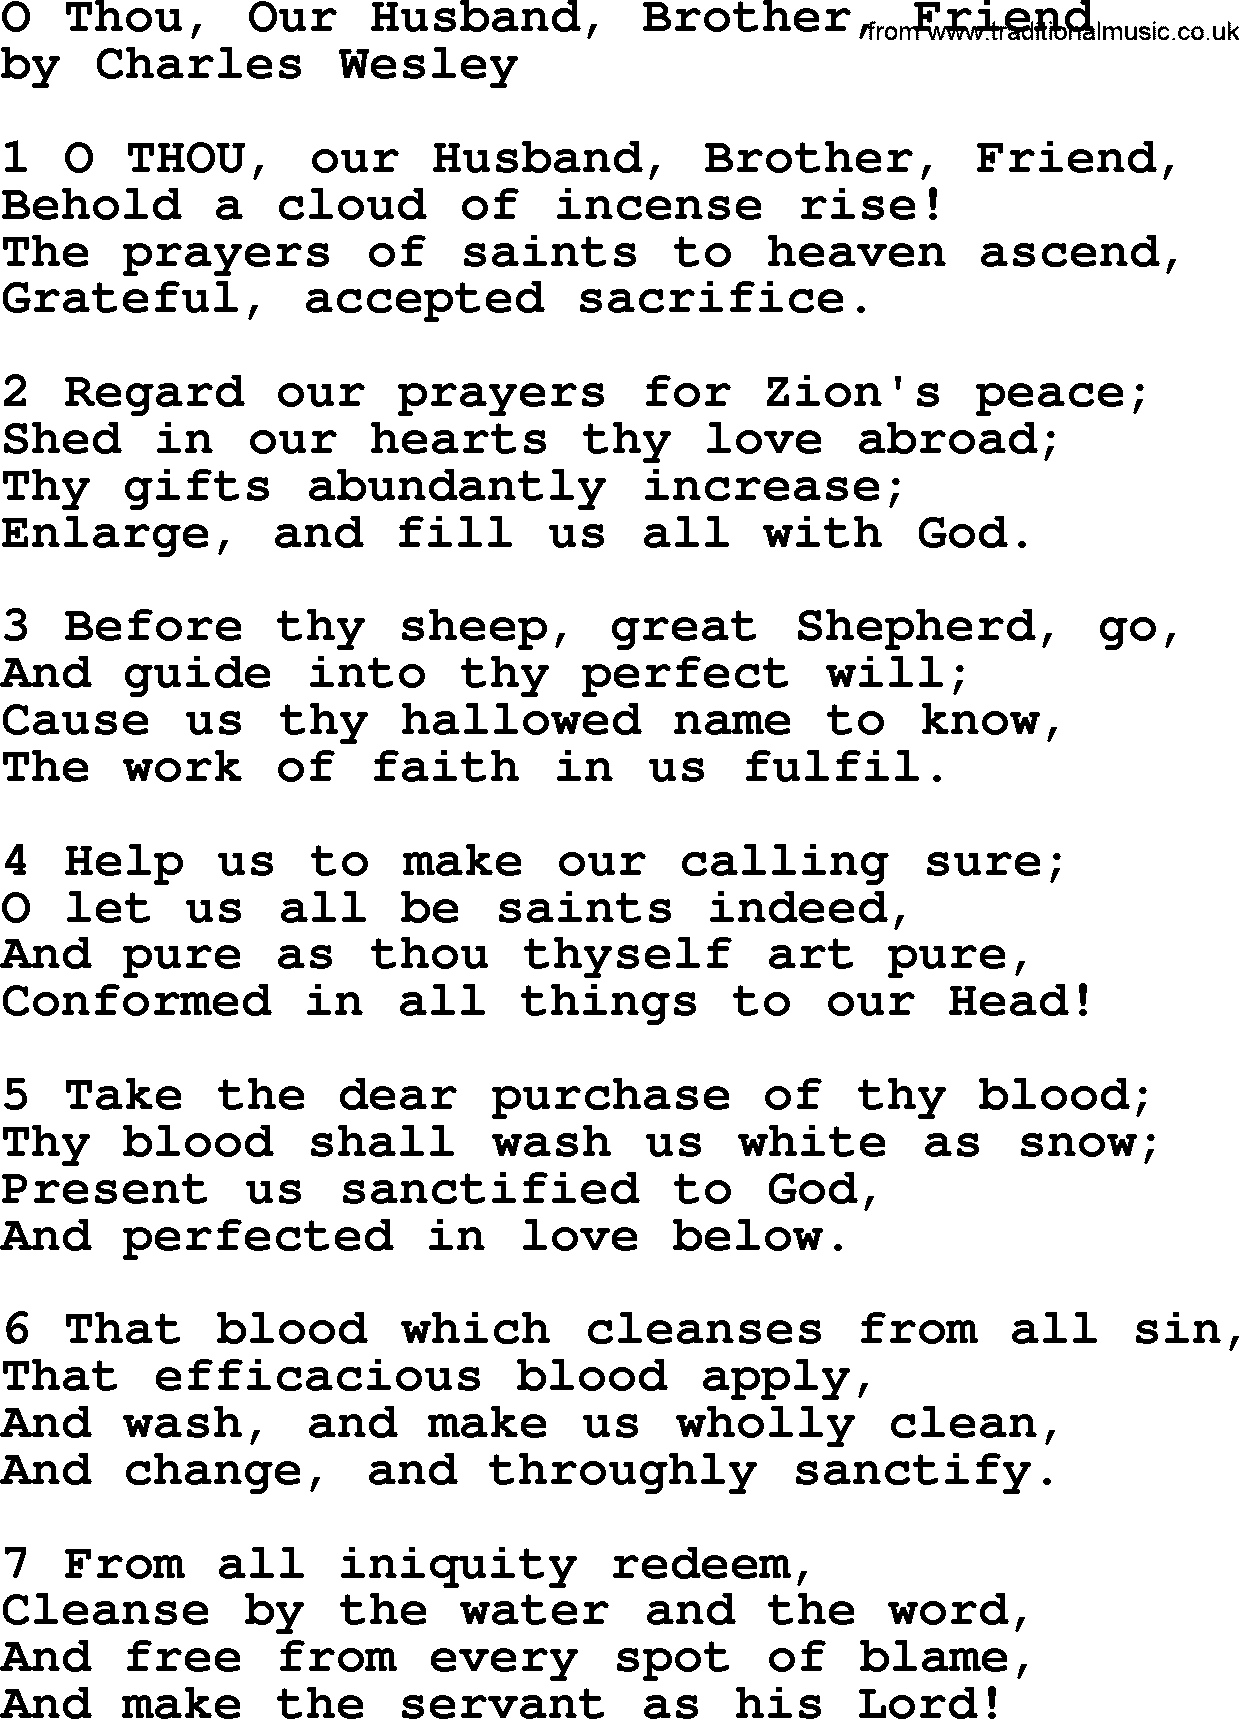 Charles Wesley hymn: O Thou, Our Husband, Brother, Friend, lyrics